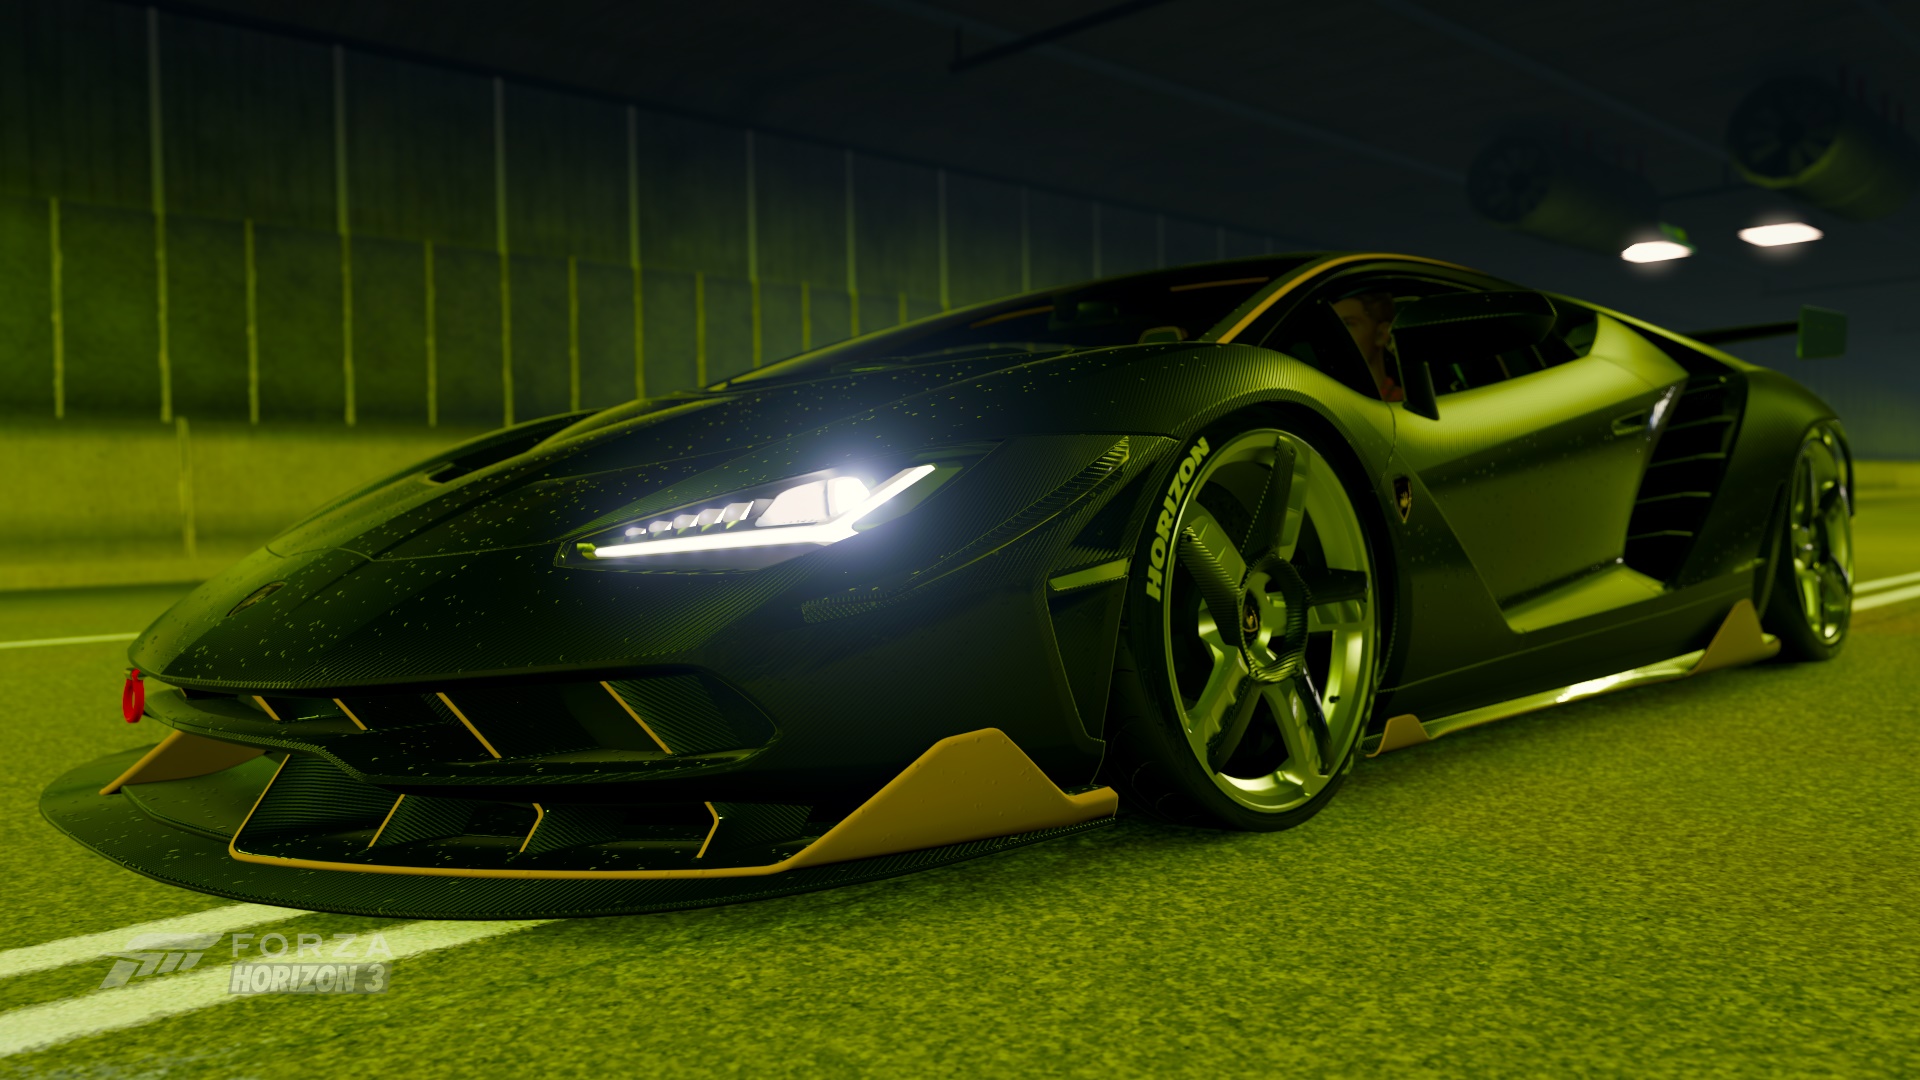 Descarga gratis la imagen Lamborghini, Coche, Fuerza, Lamborghini Centenario, Videojuego, Forza Horizon 3 en el escritorio de tu PC